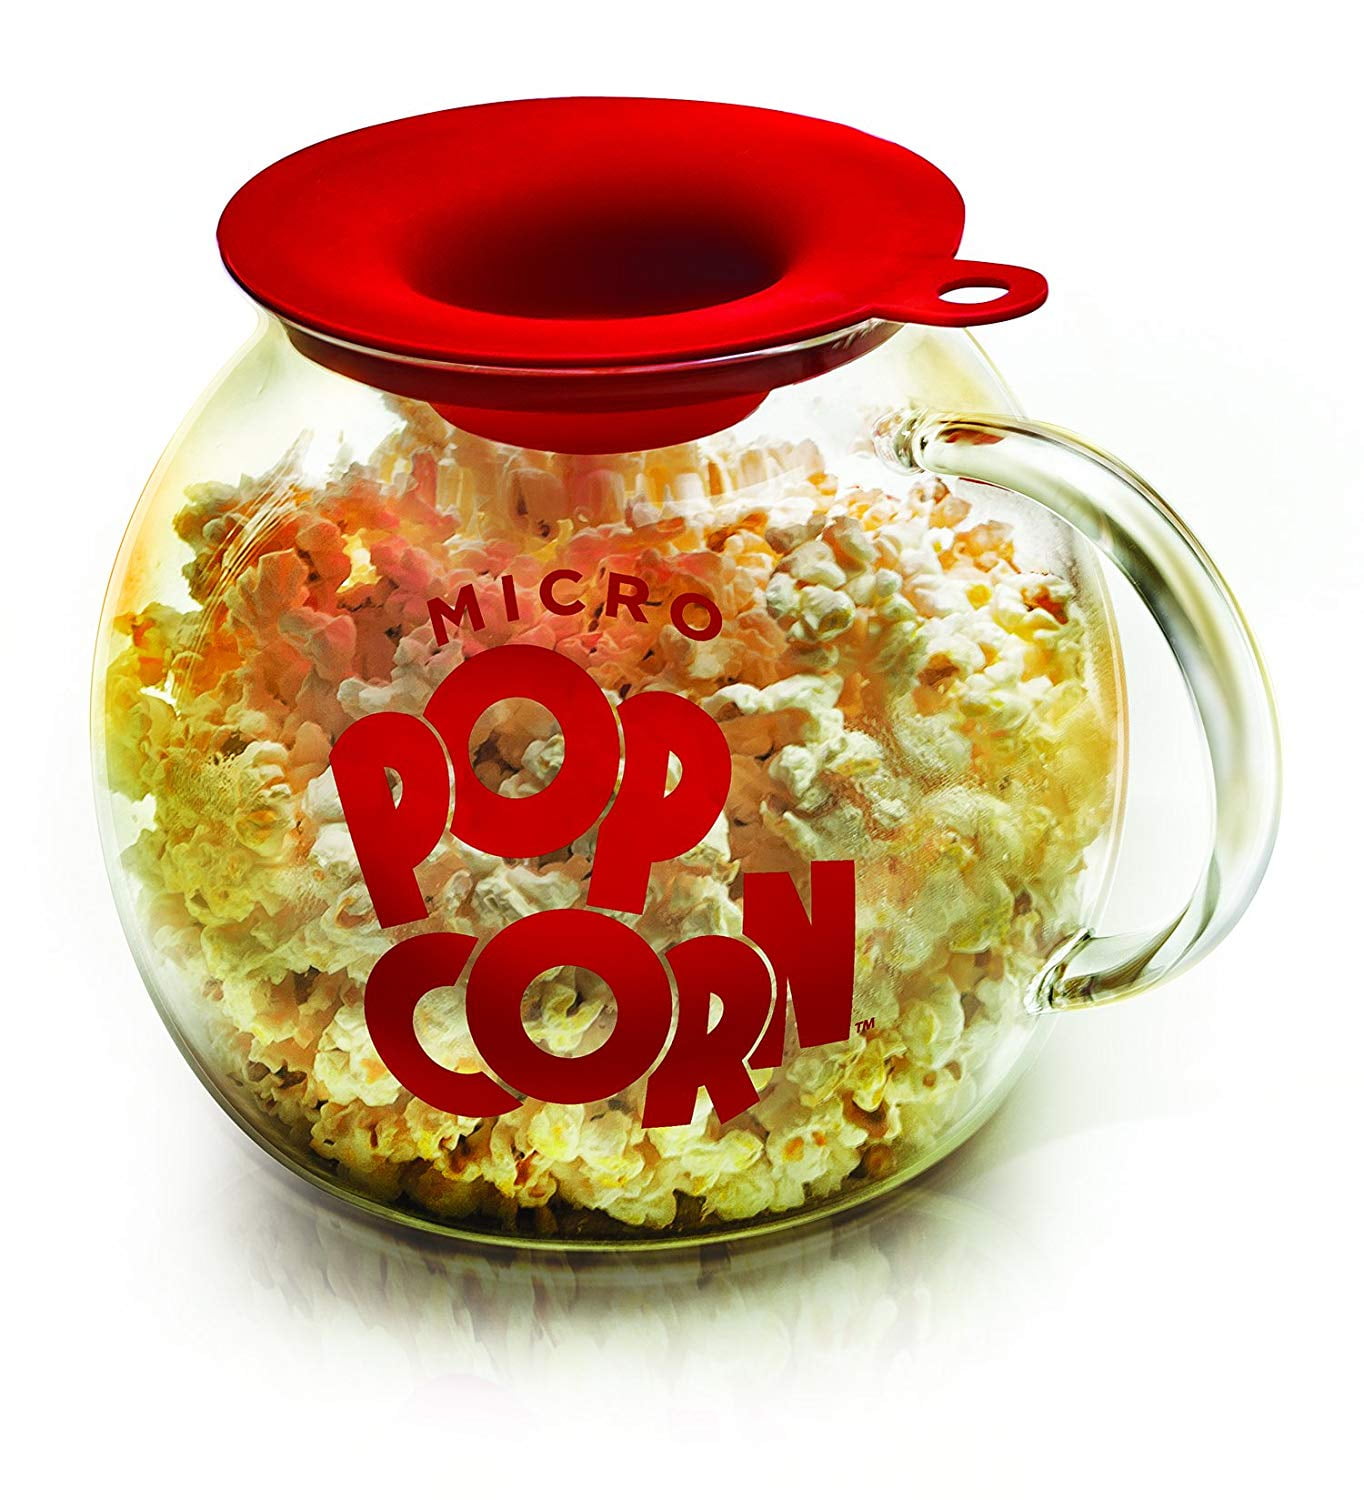 Popcorn Popper – it sauce